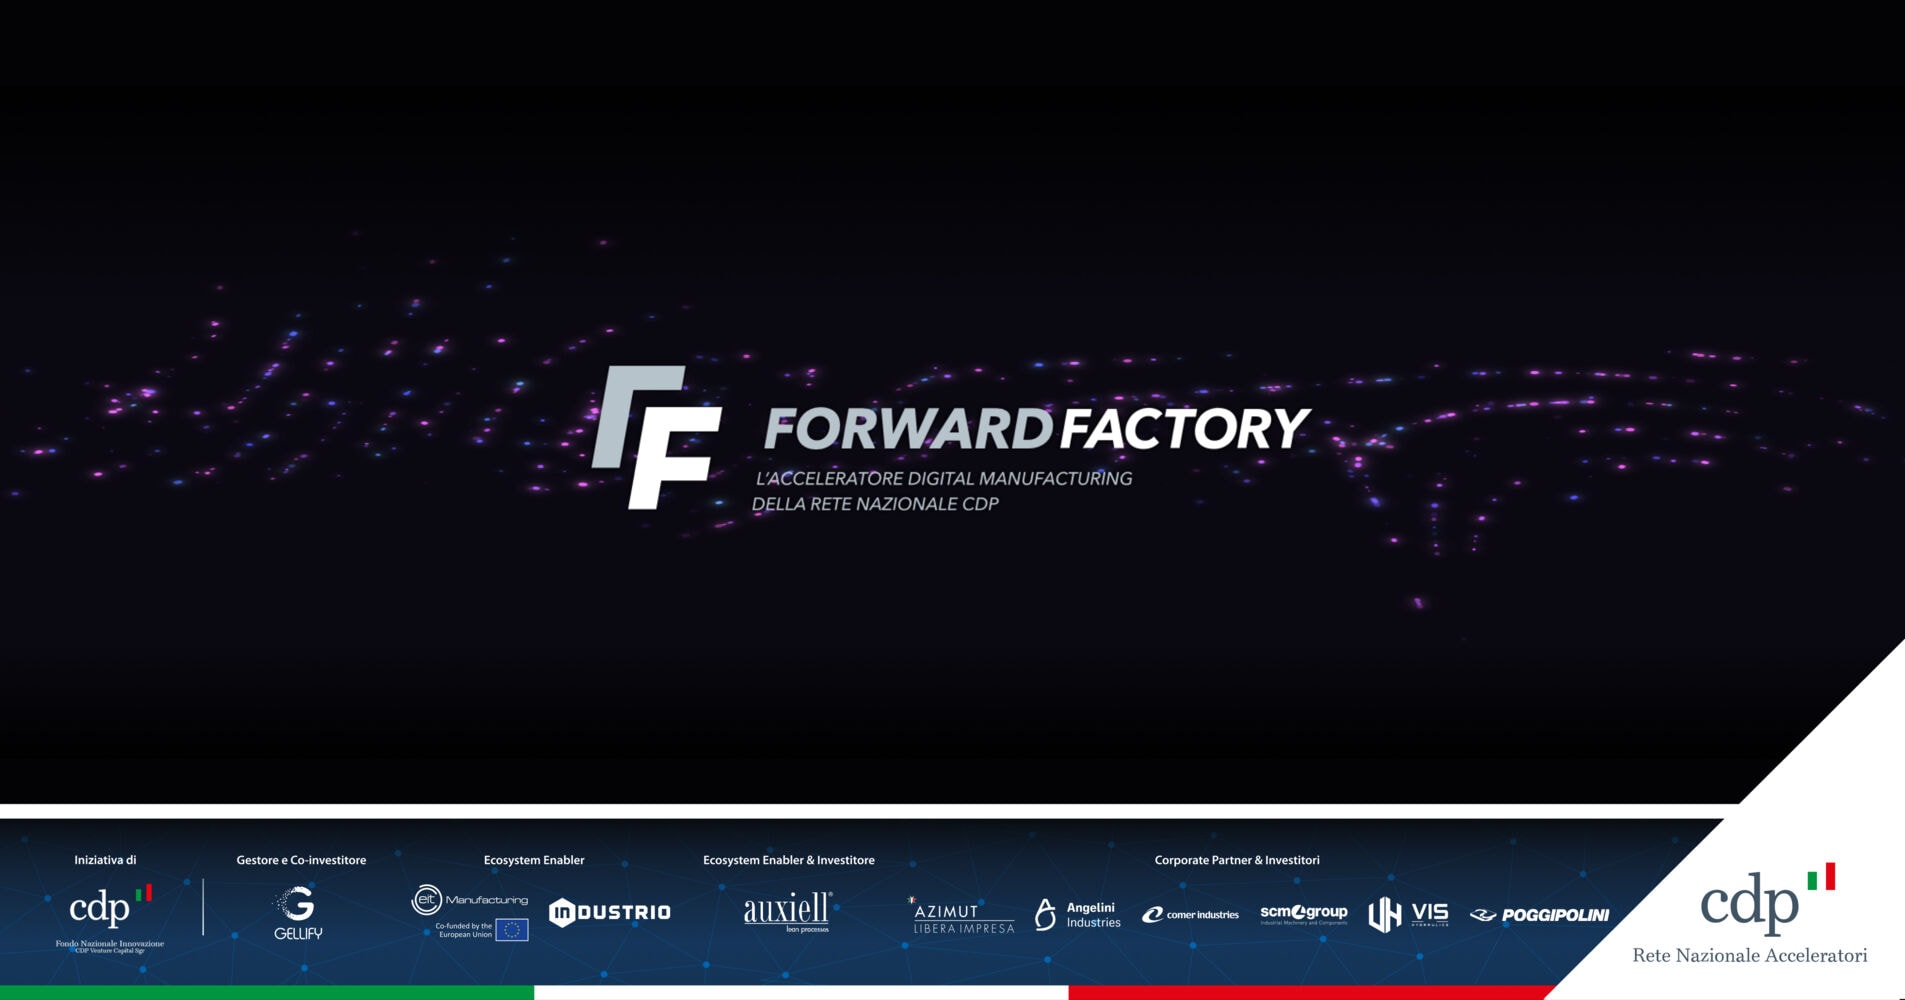 Digital Manufacturing: Scm Group partner of CDP Venture Capital's new “Forward Factory” accelerator